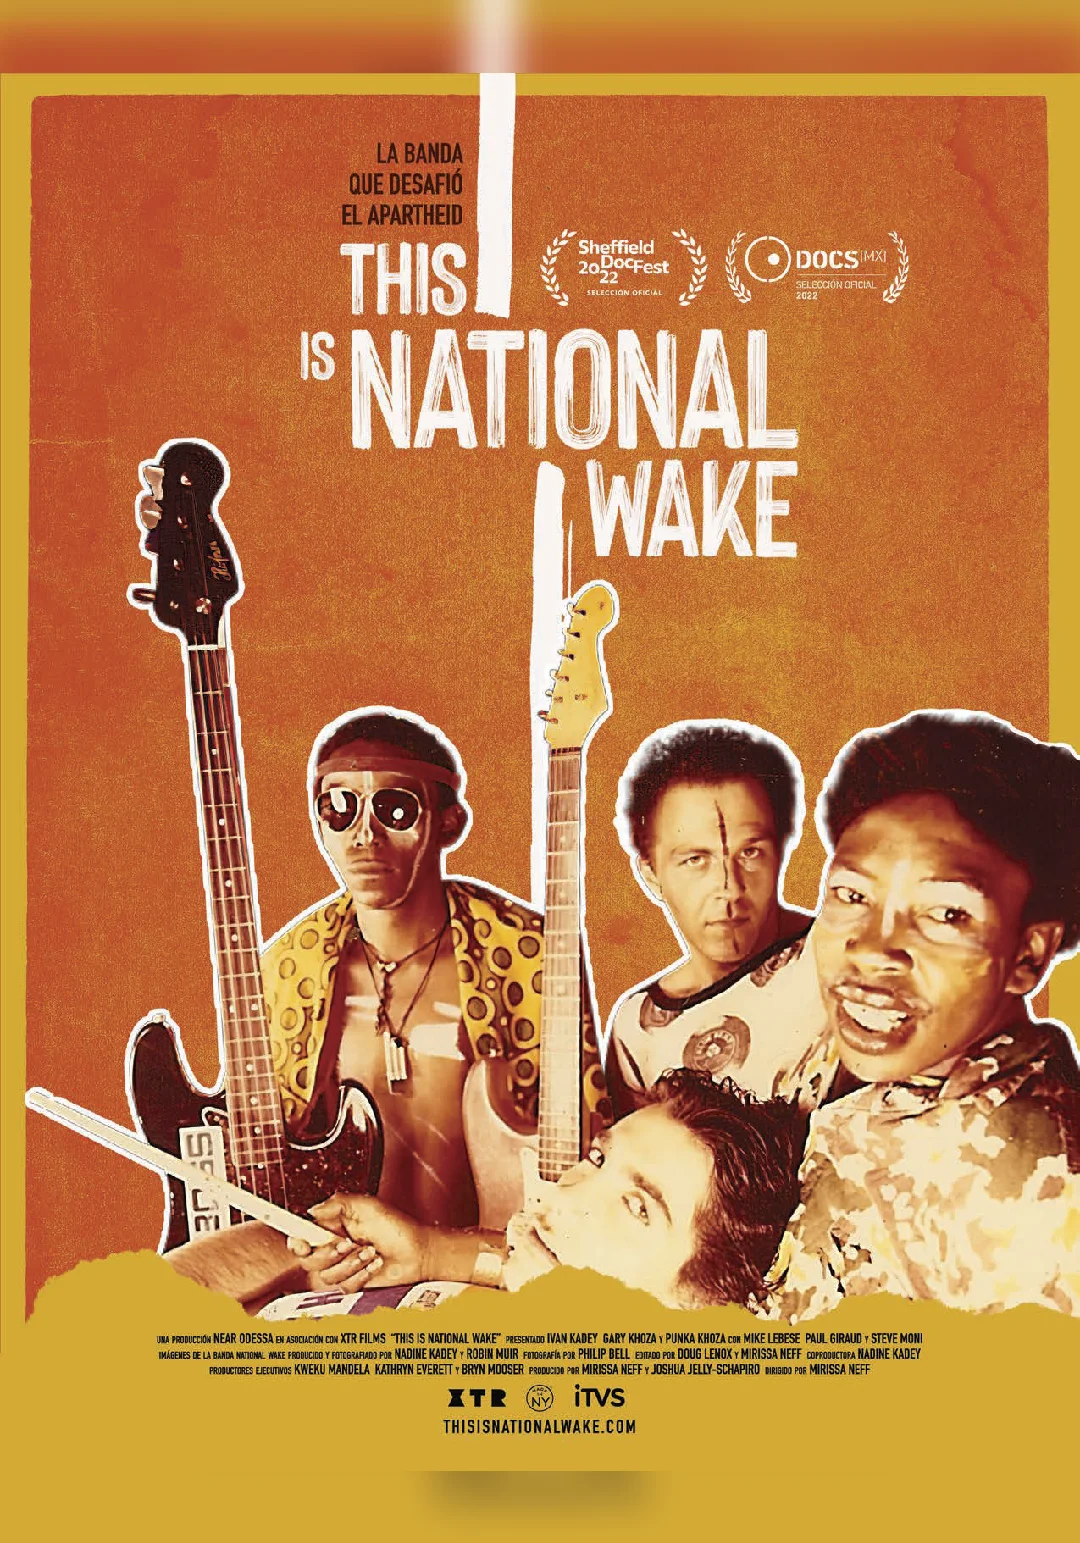 Ganadores, This is National Wake, Mirissa Neff, Ganadores, 17 docsmx